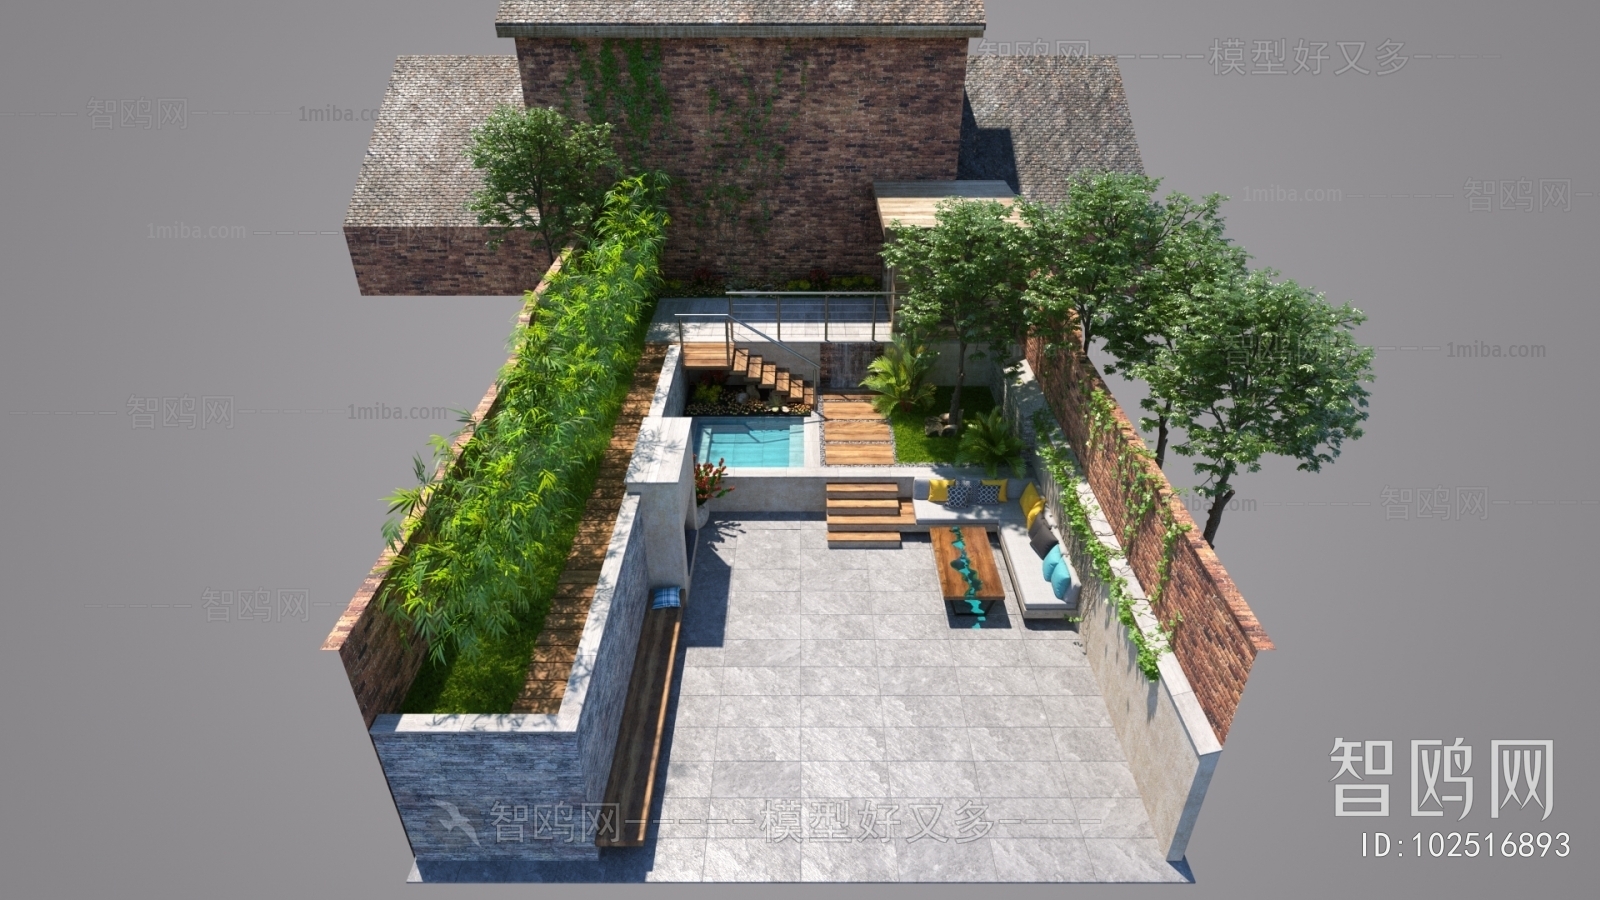 Modern Courtyard/landscape